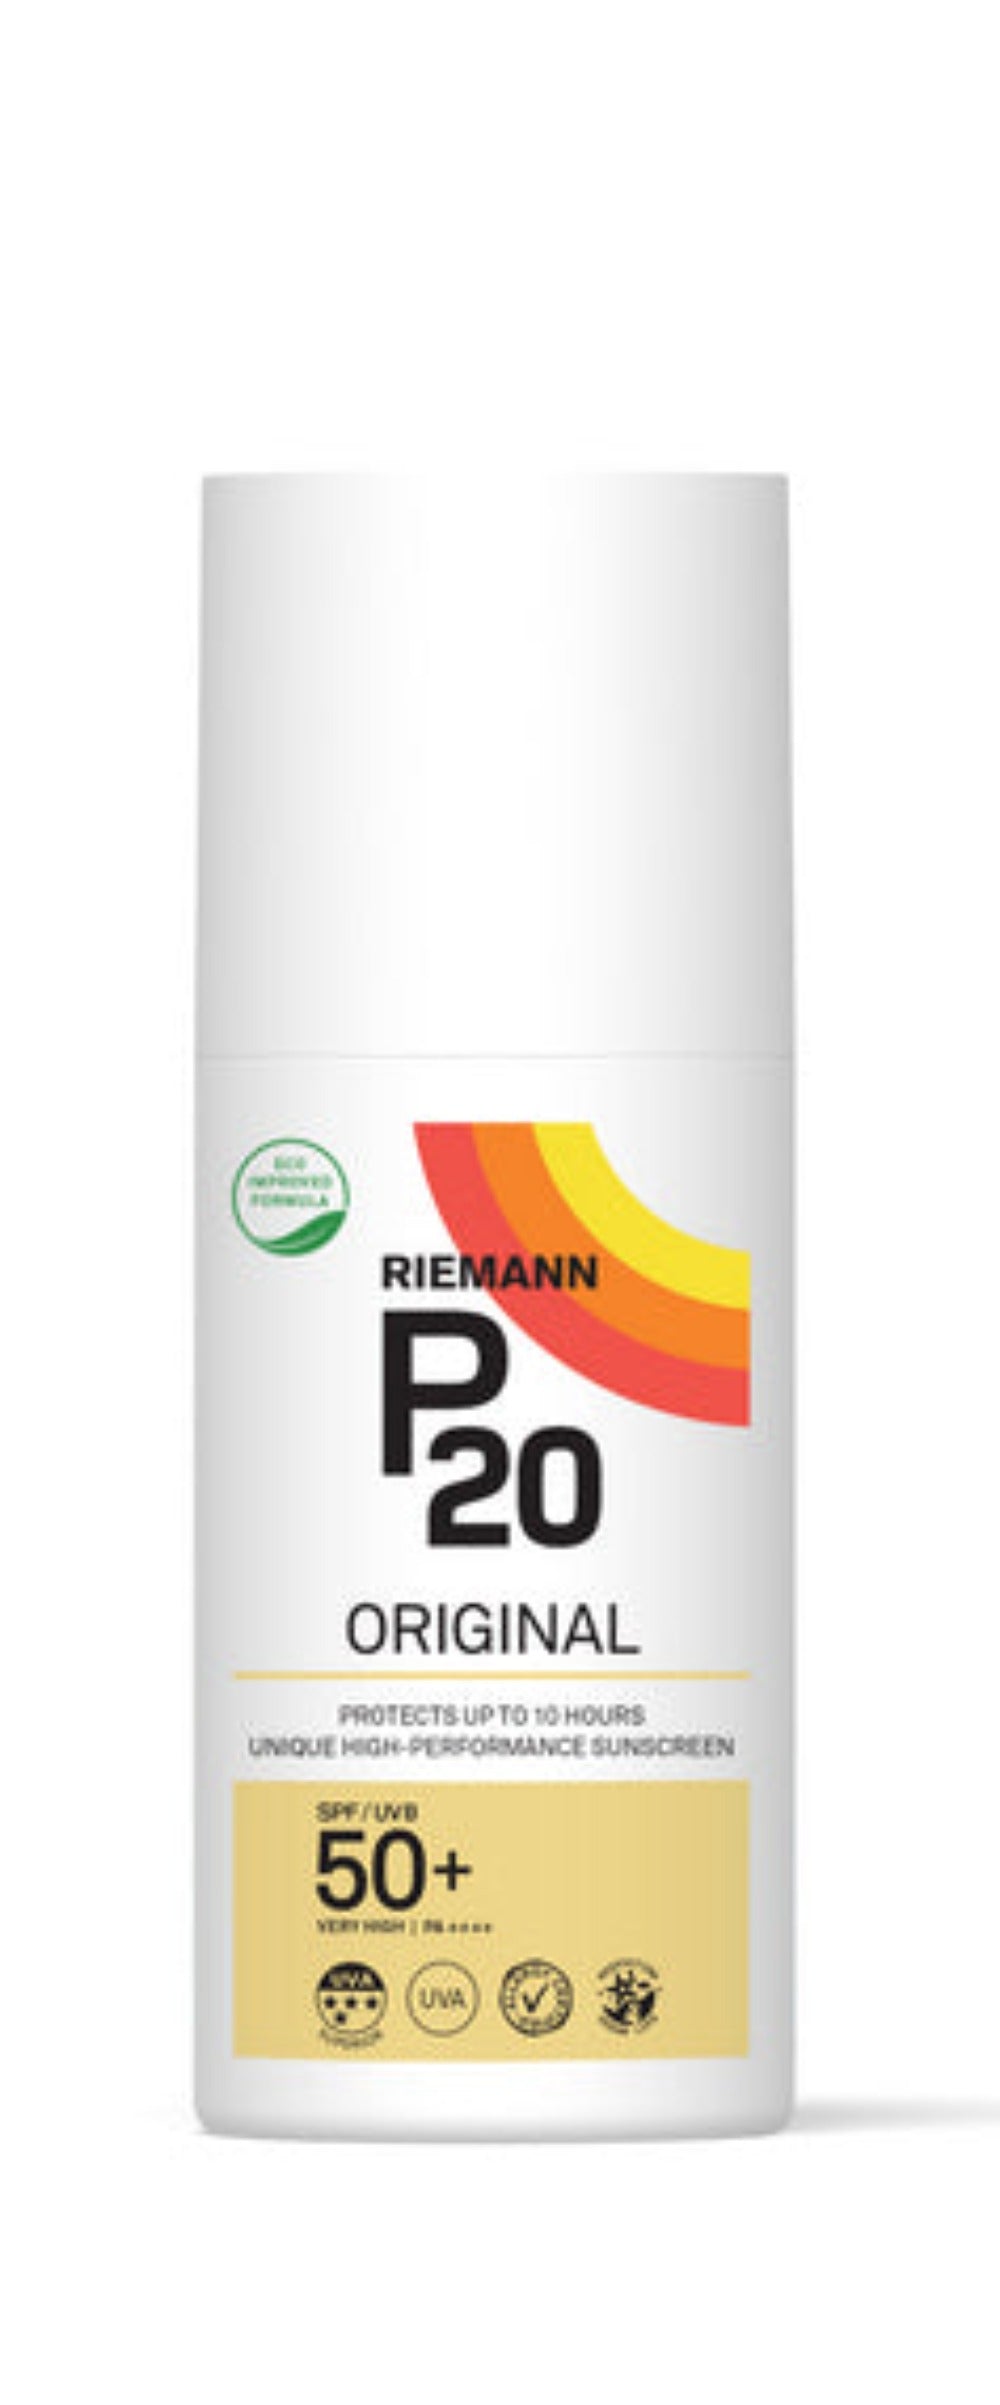 P20 Original Spray SPF 50+ 175ml Bottle